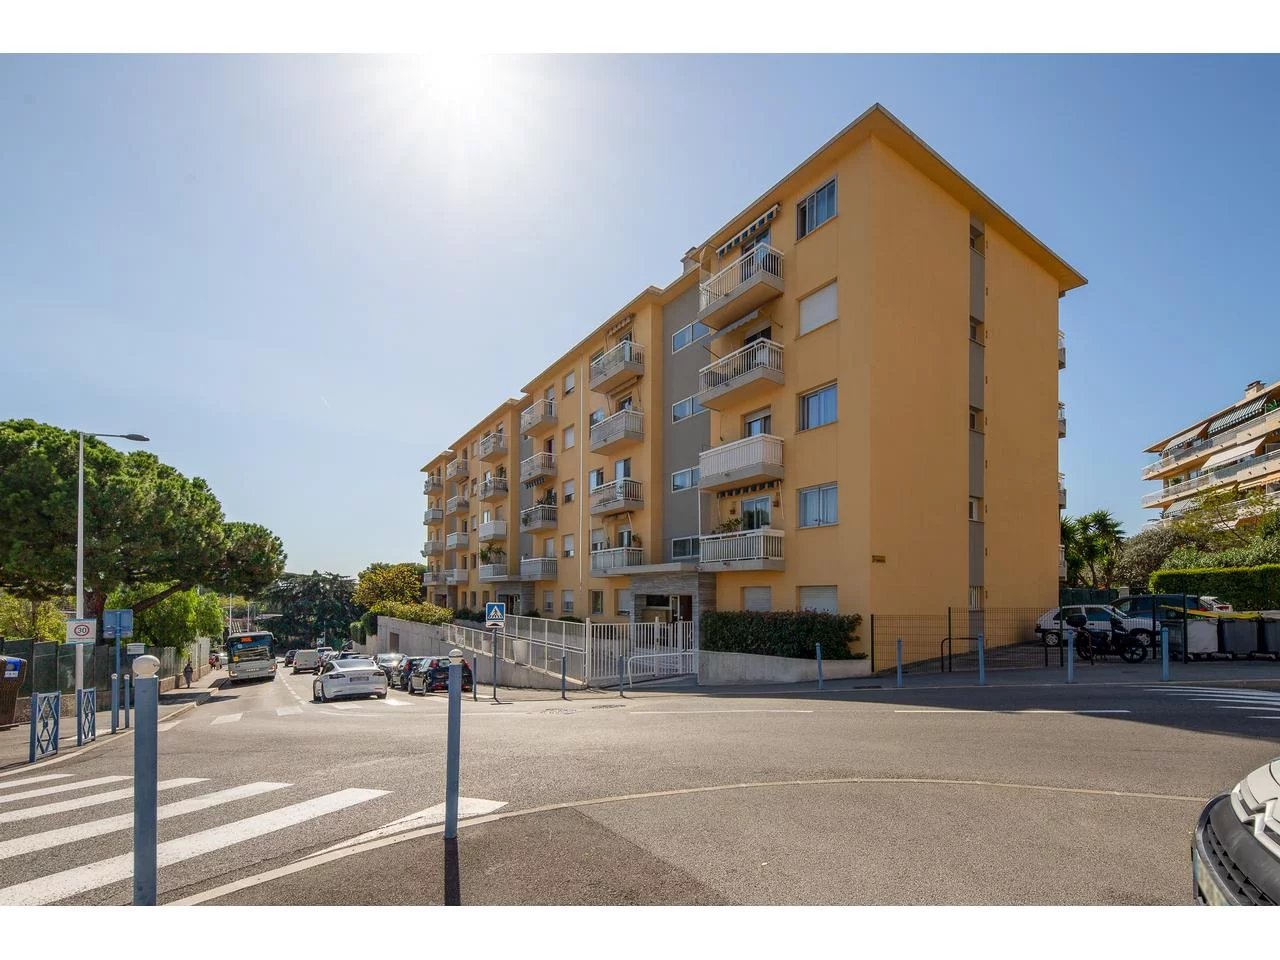 Appartement  3 Locali 71m2  In vendita   244 500 €